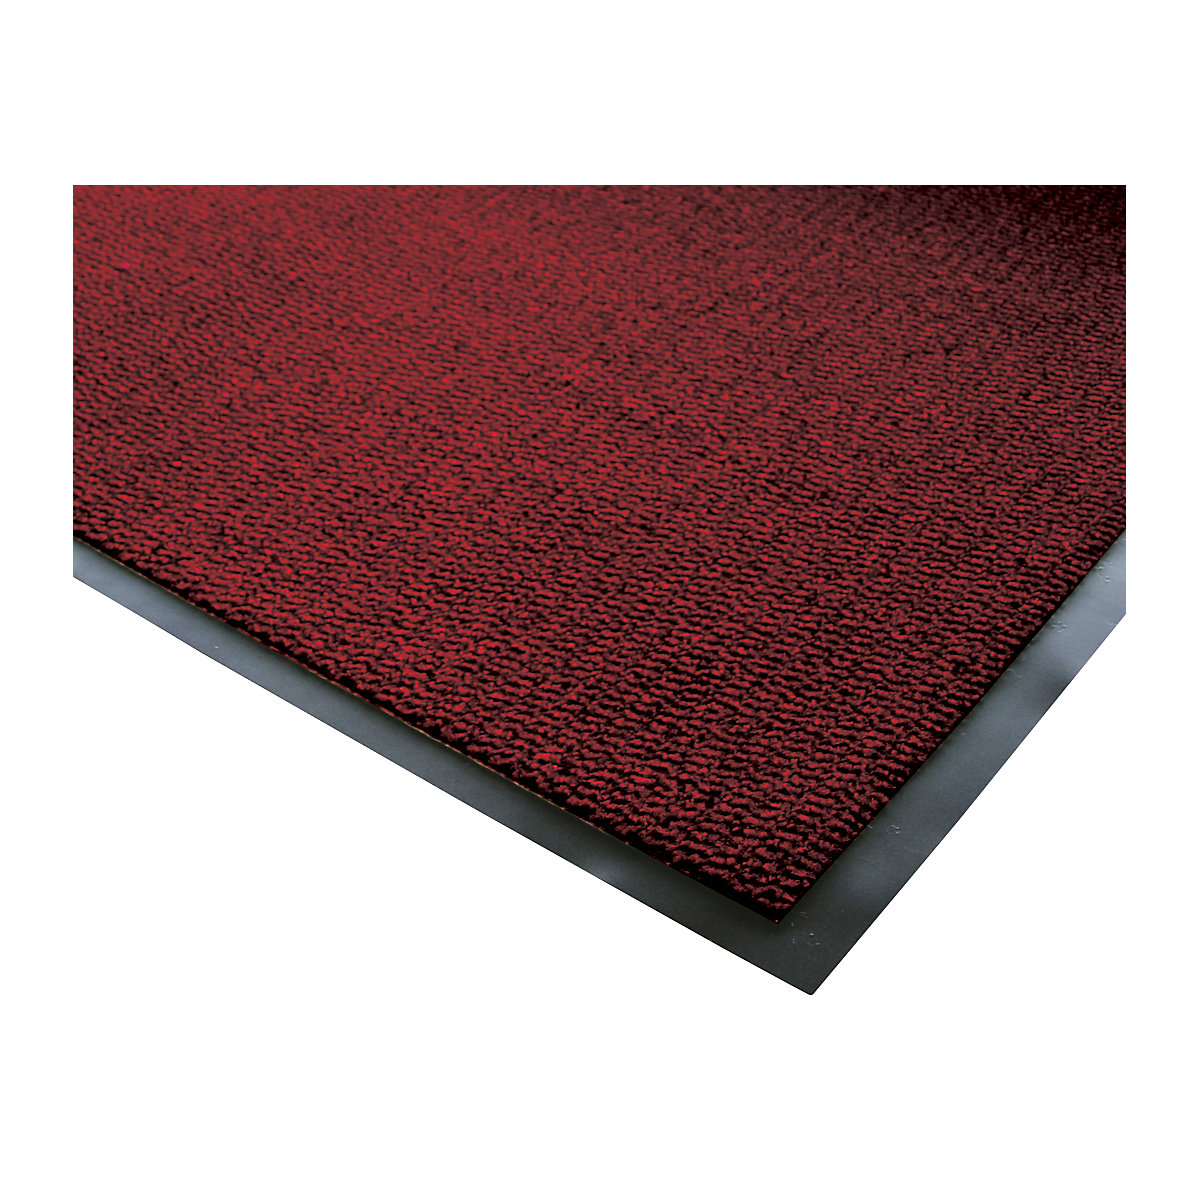 Entrance matting for indoor use, polypropylene pile, LxW 1800 x 1200 mm, black / red